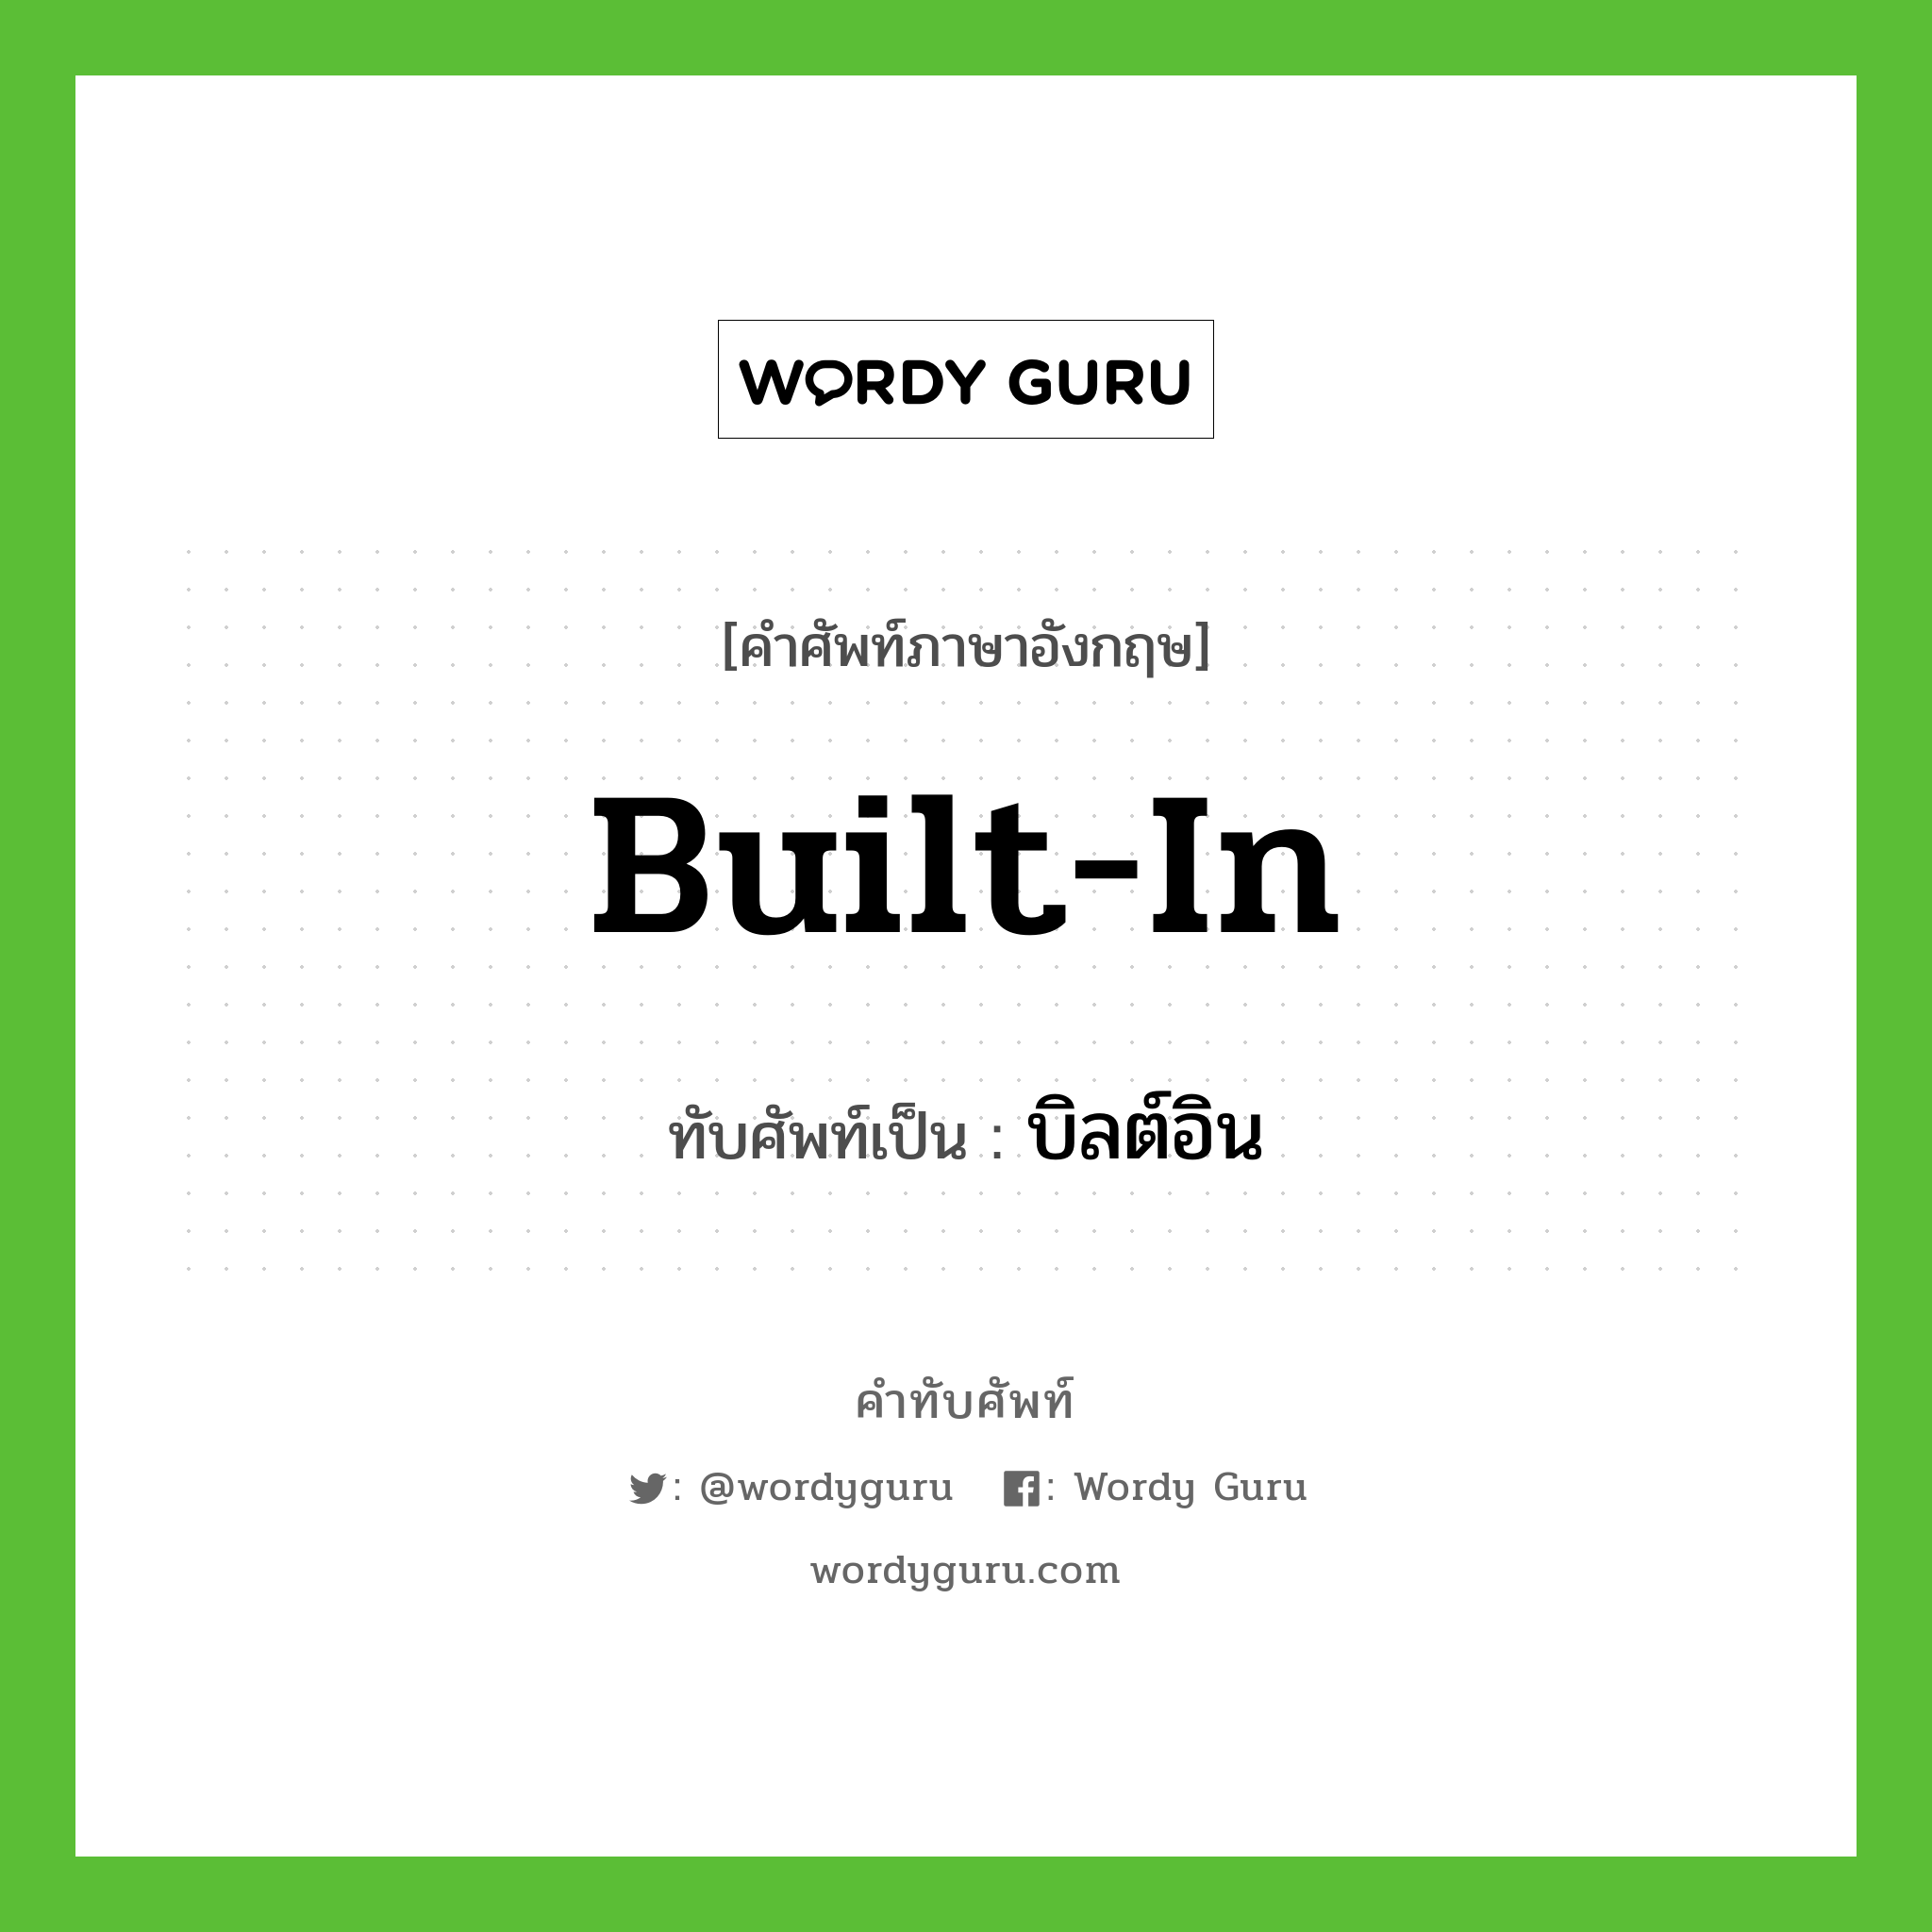 built-in เขียนเป็นคำไทยว่าอะไร?, คำศัพท์ภาษาอังกฤษ built-in ทับศัพท์เป็น บิลต์อิน